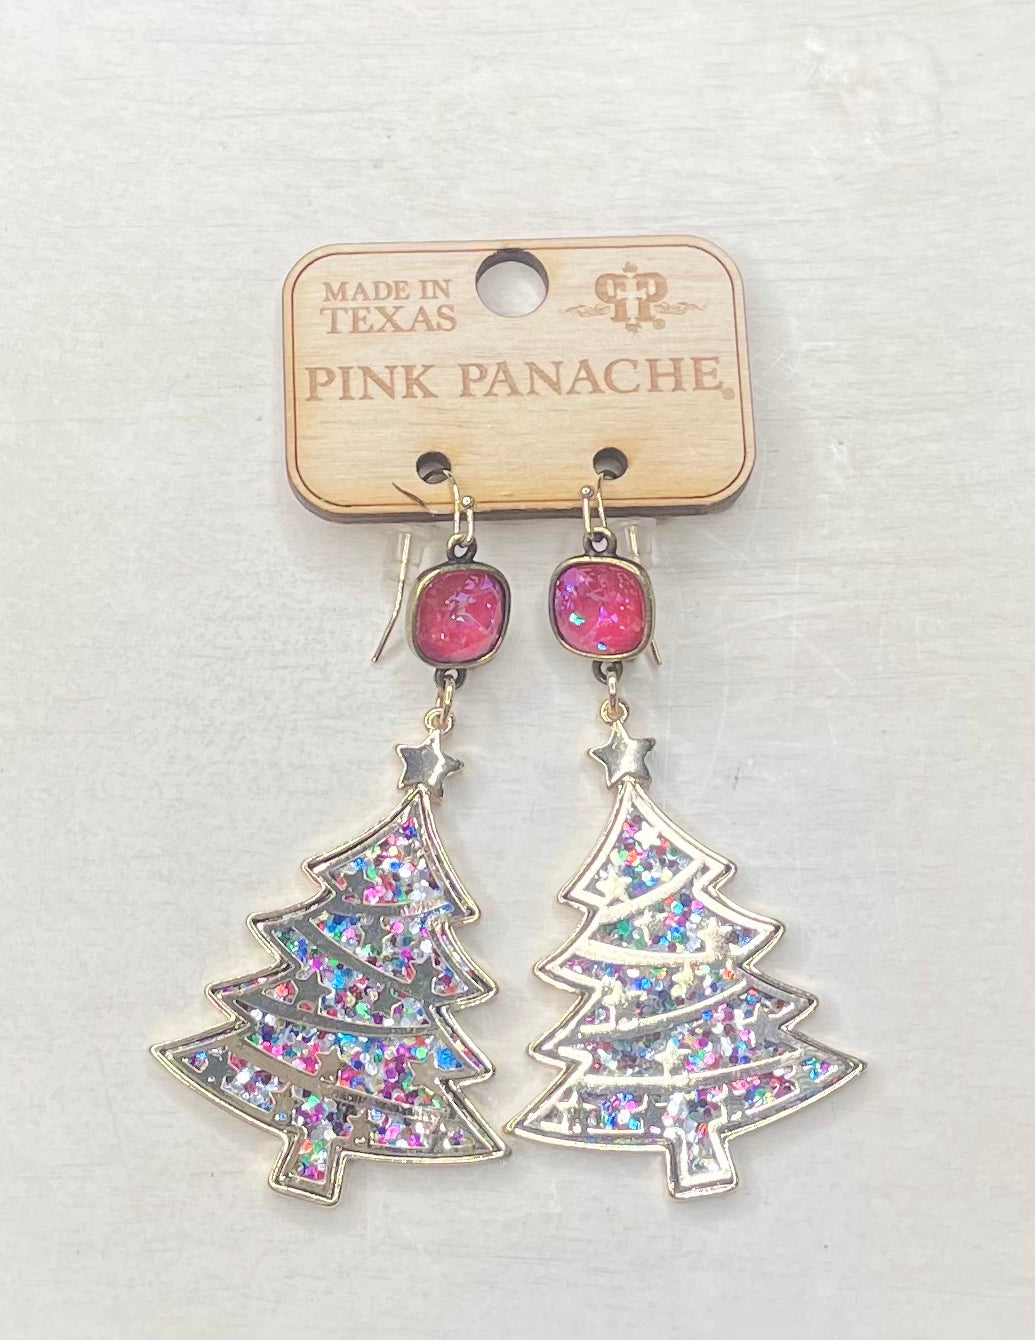 Pink Panache Earrings - 1CNC CH279